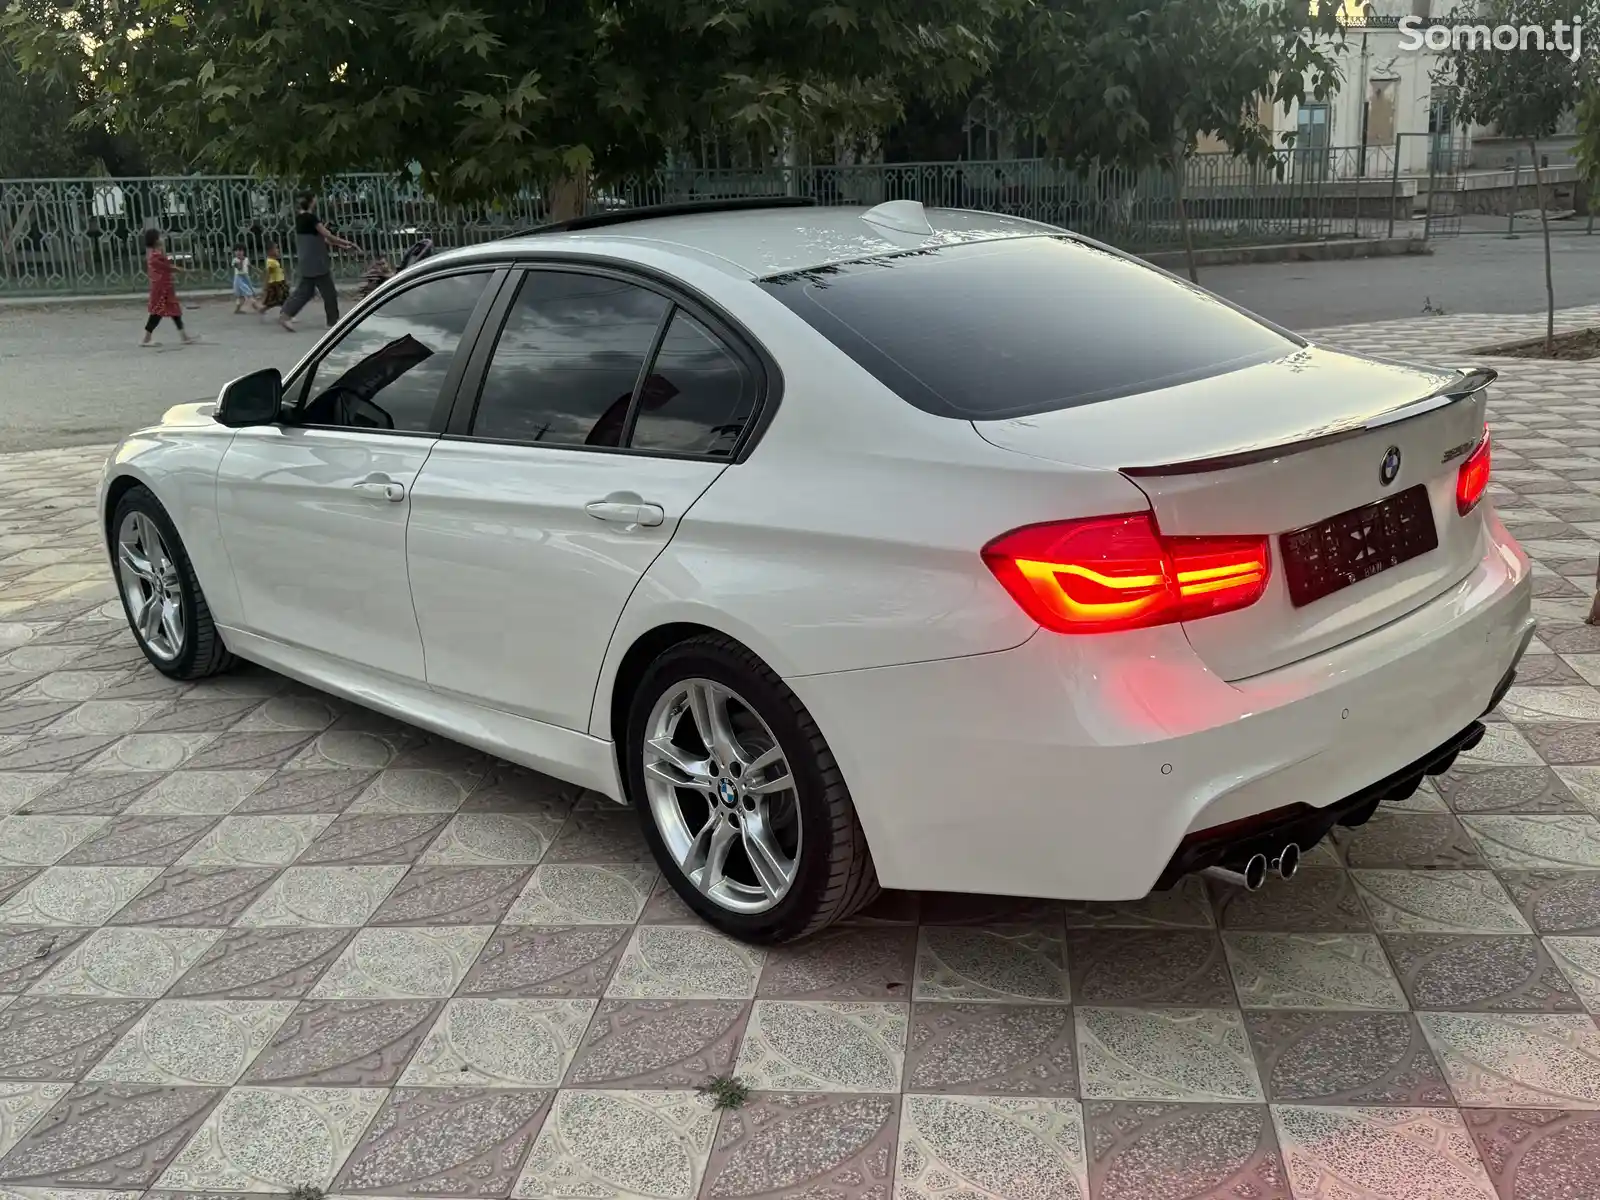 BMW 3 series, 2017-2